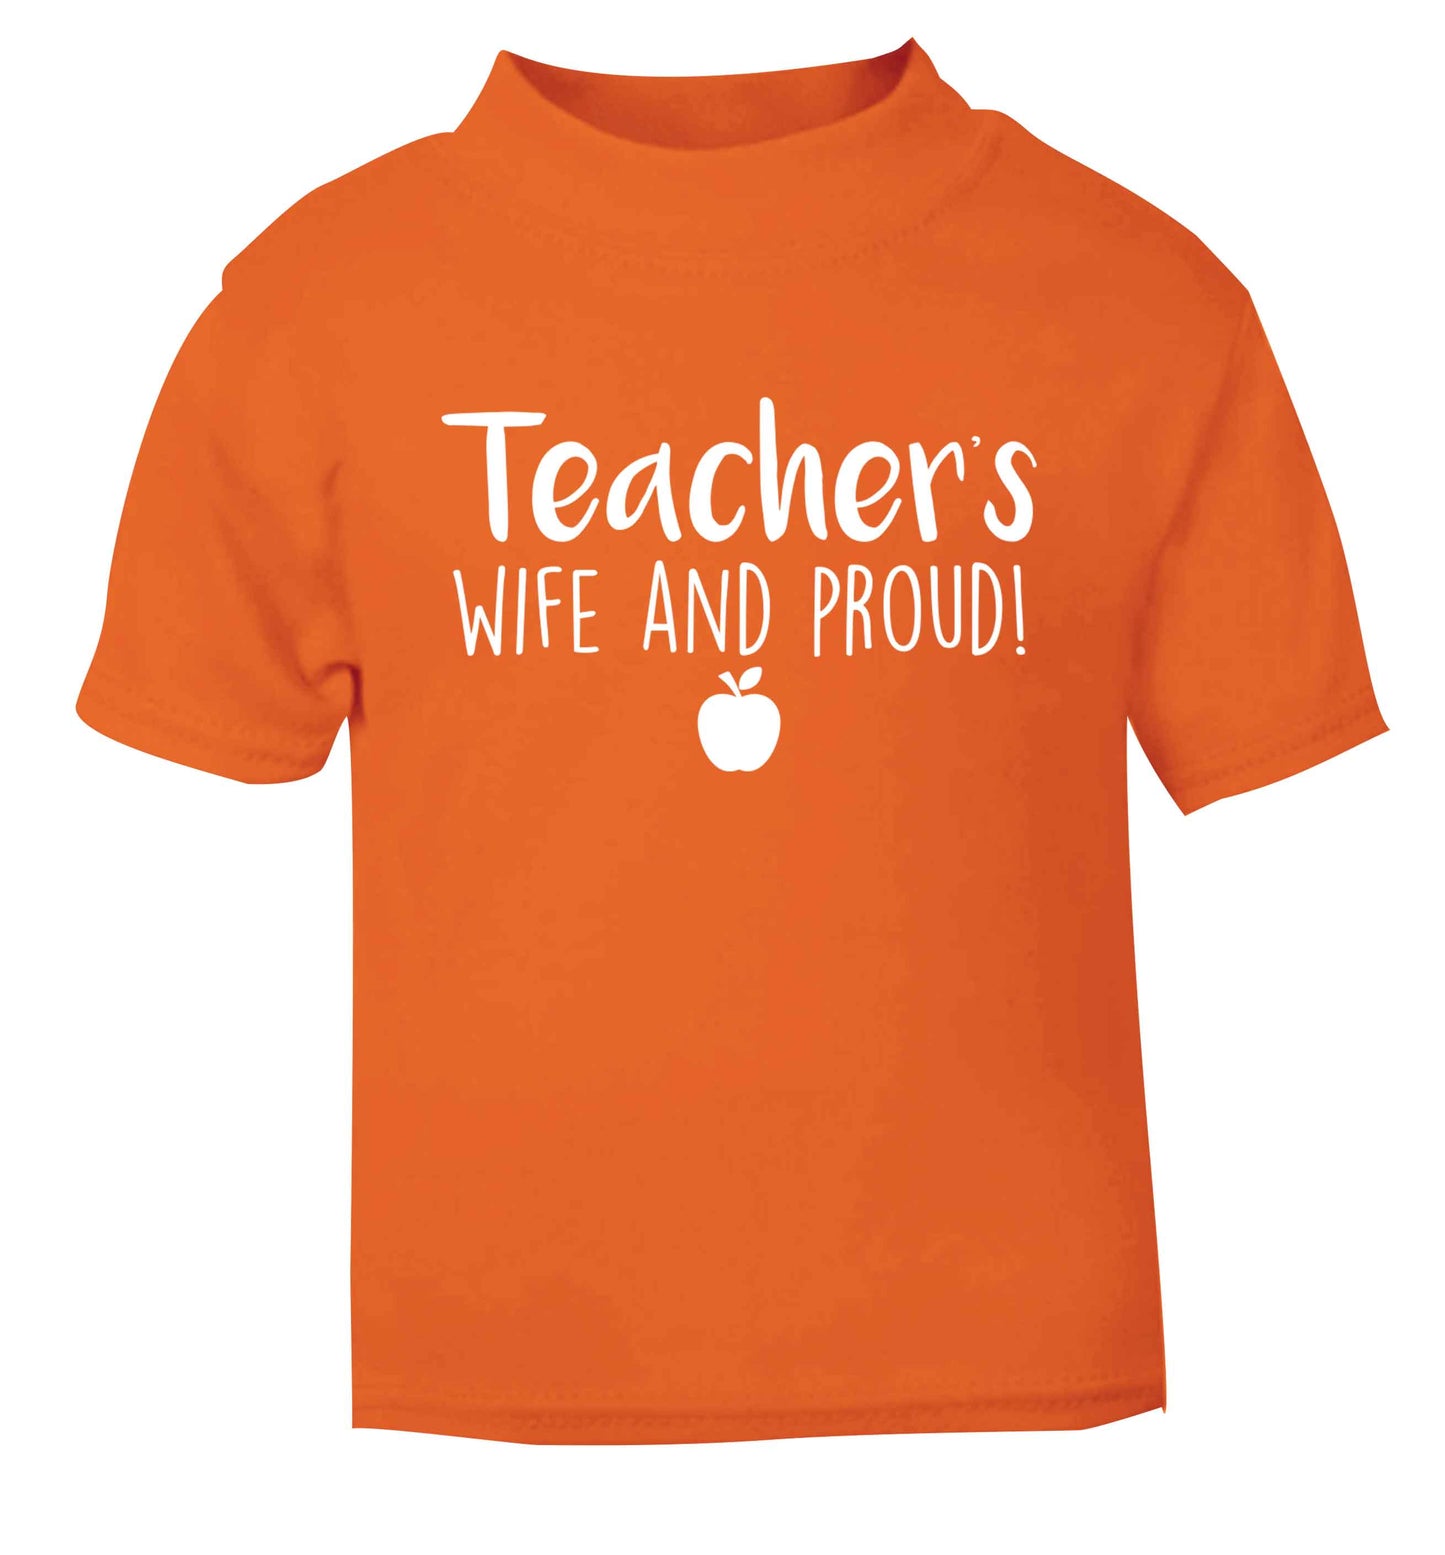 Teachers wife and proud orange baby toddler Tshirt 2 Years